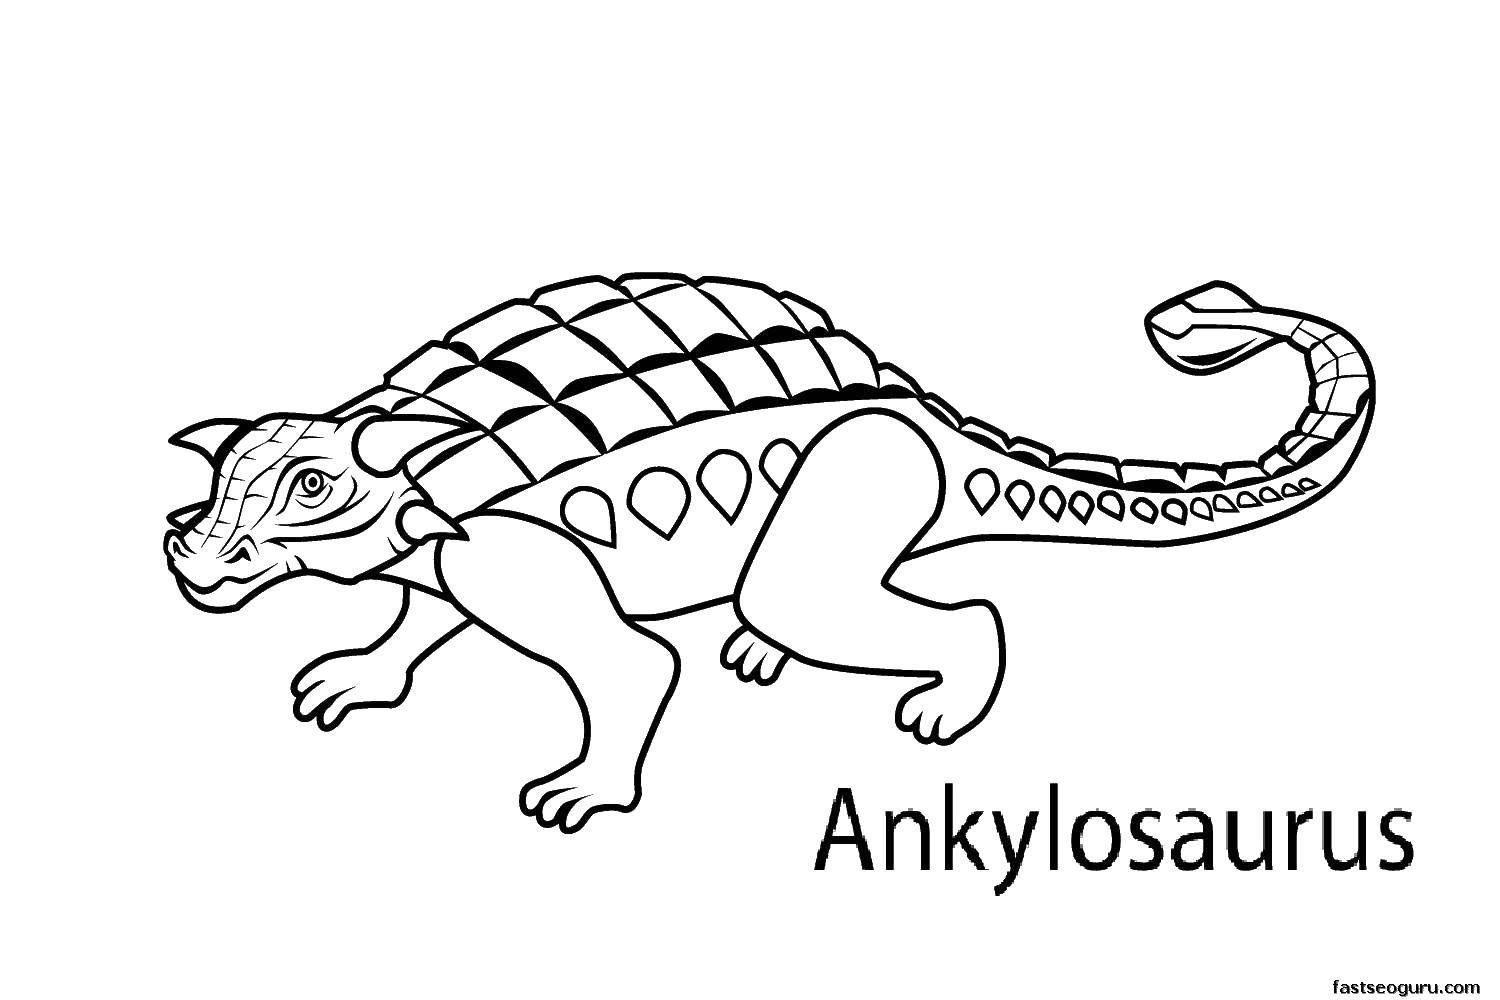 Coloring Ankylosaur. Category dinosaur. Tags:  Ankylosaur, dinosaur.